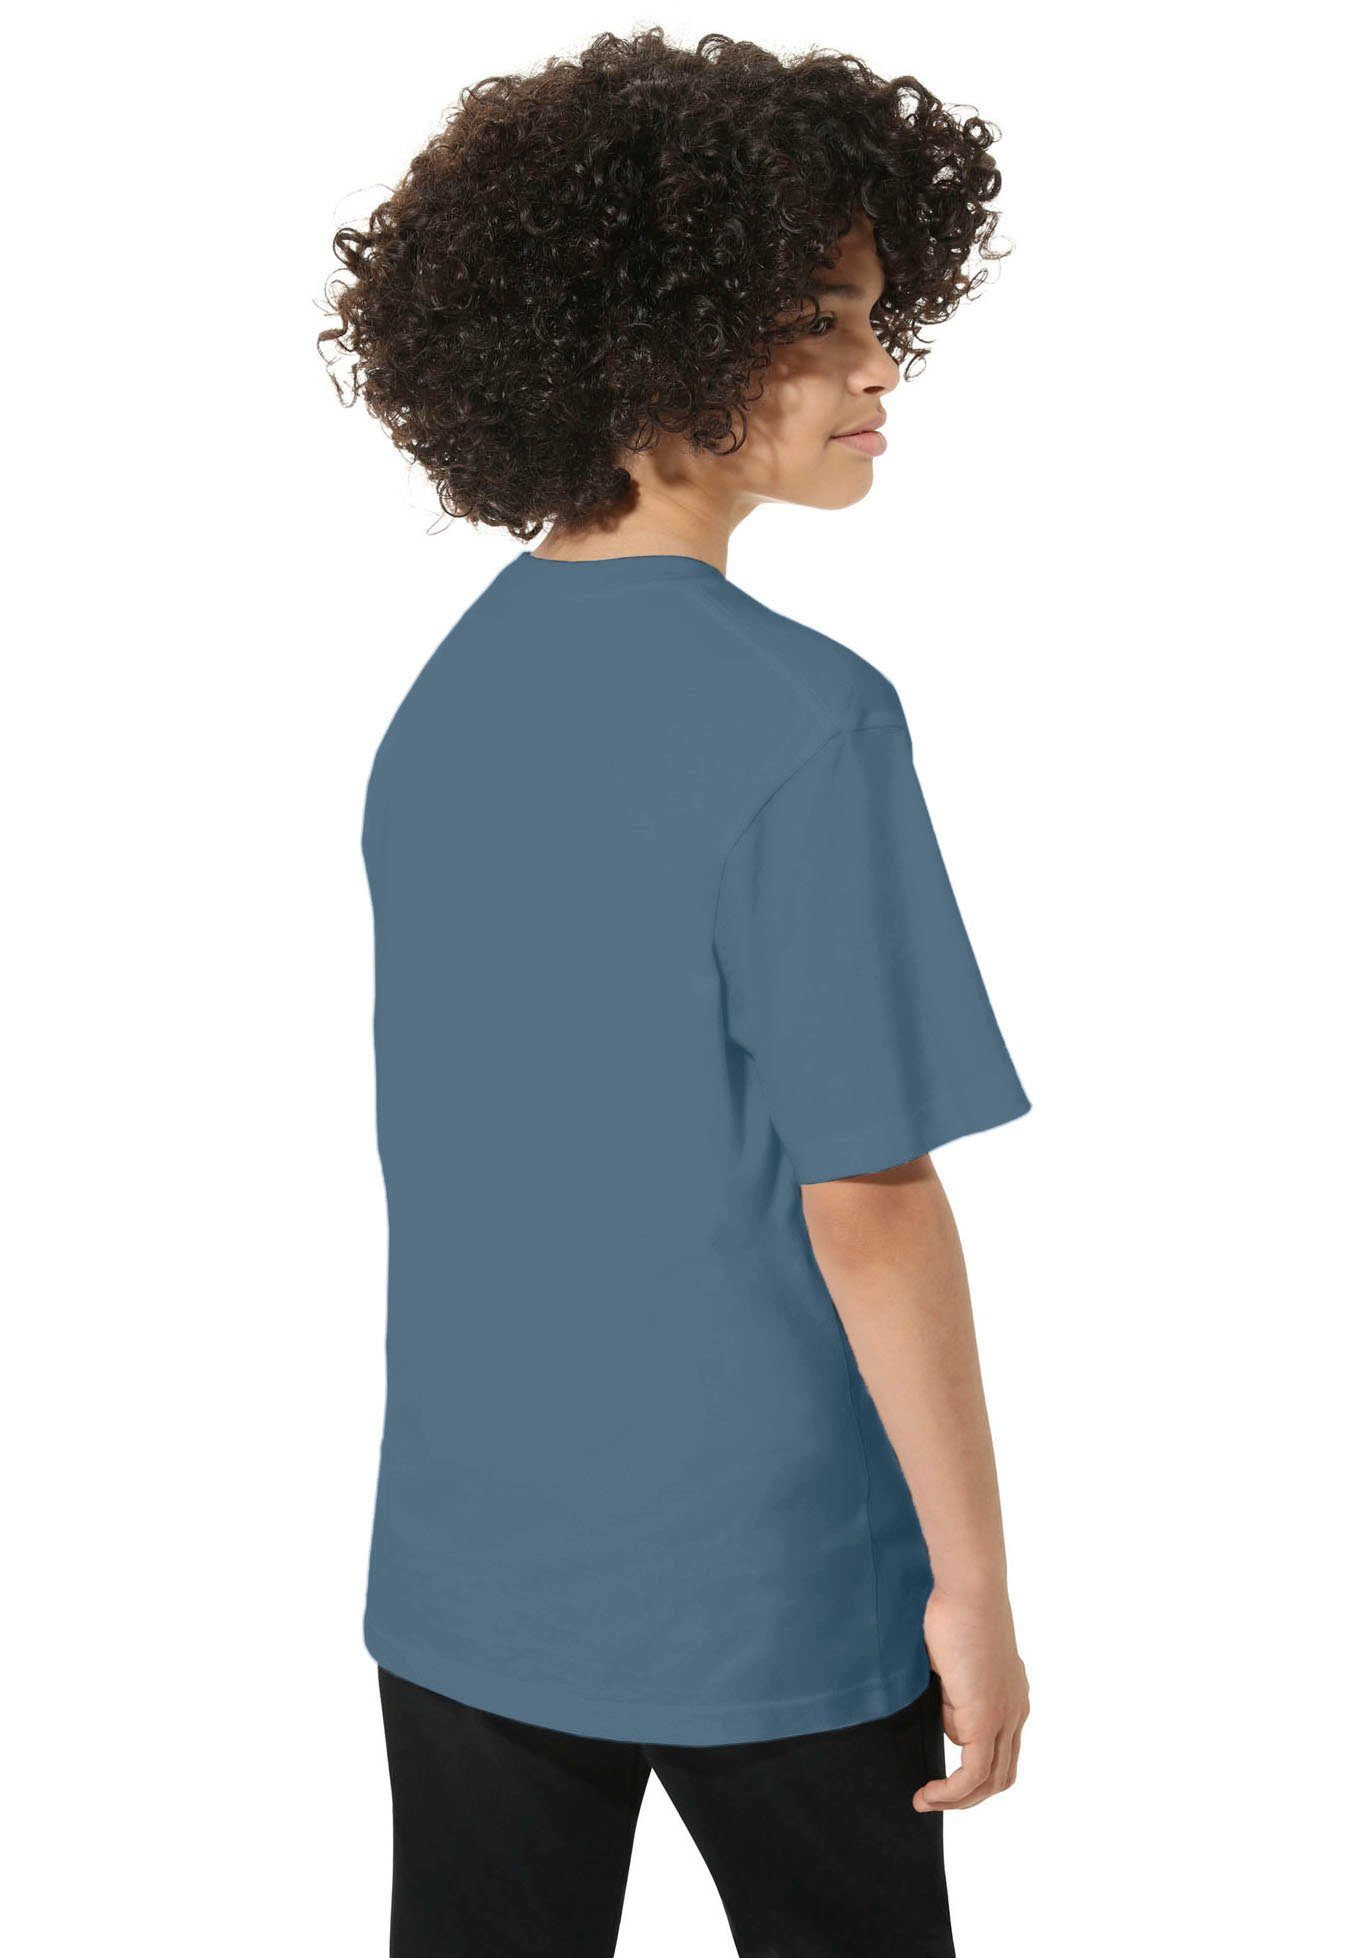 CLASSIC bluestone BOYS VANS T-Shirt Vans